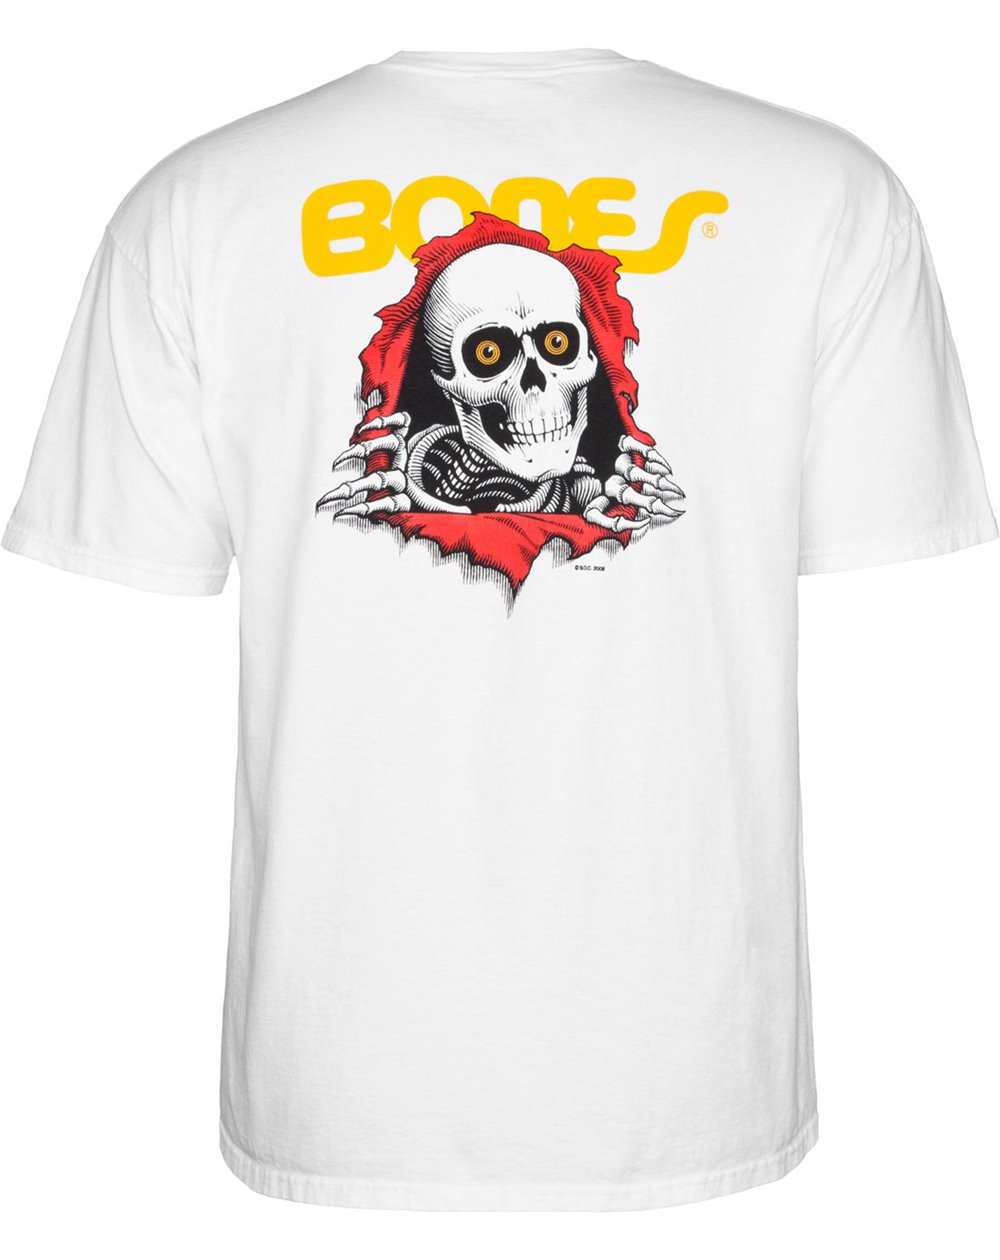 Powell Peralta T-Shirt Homme Ripper (White)